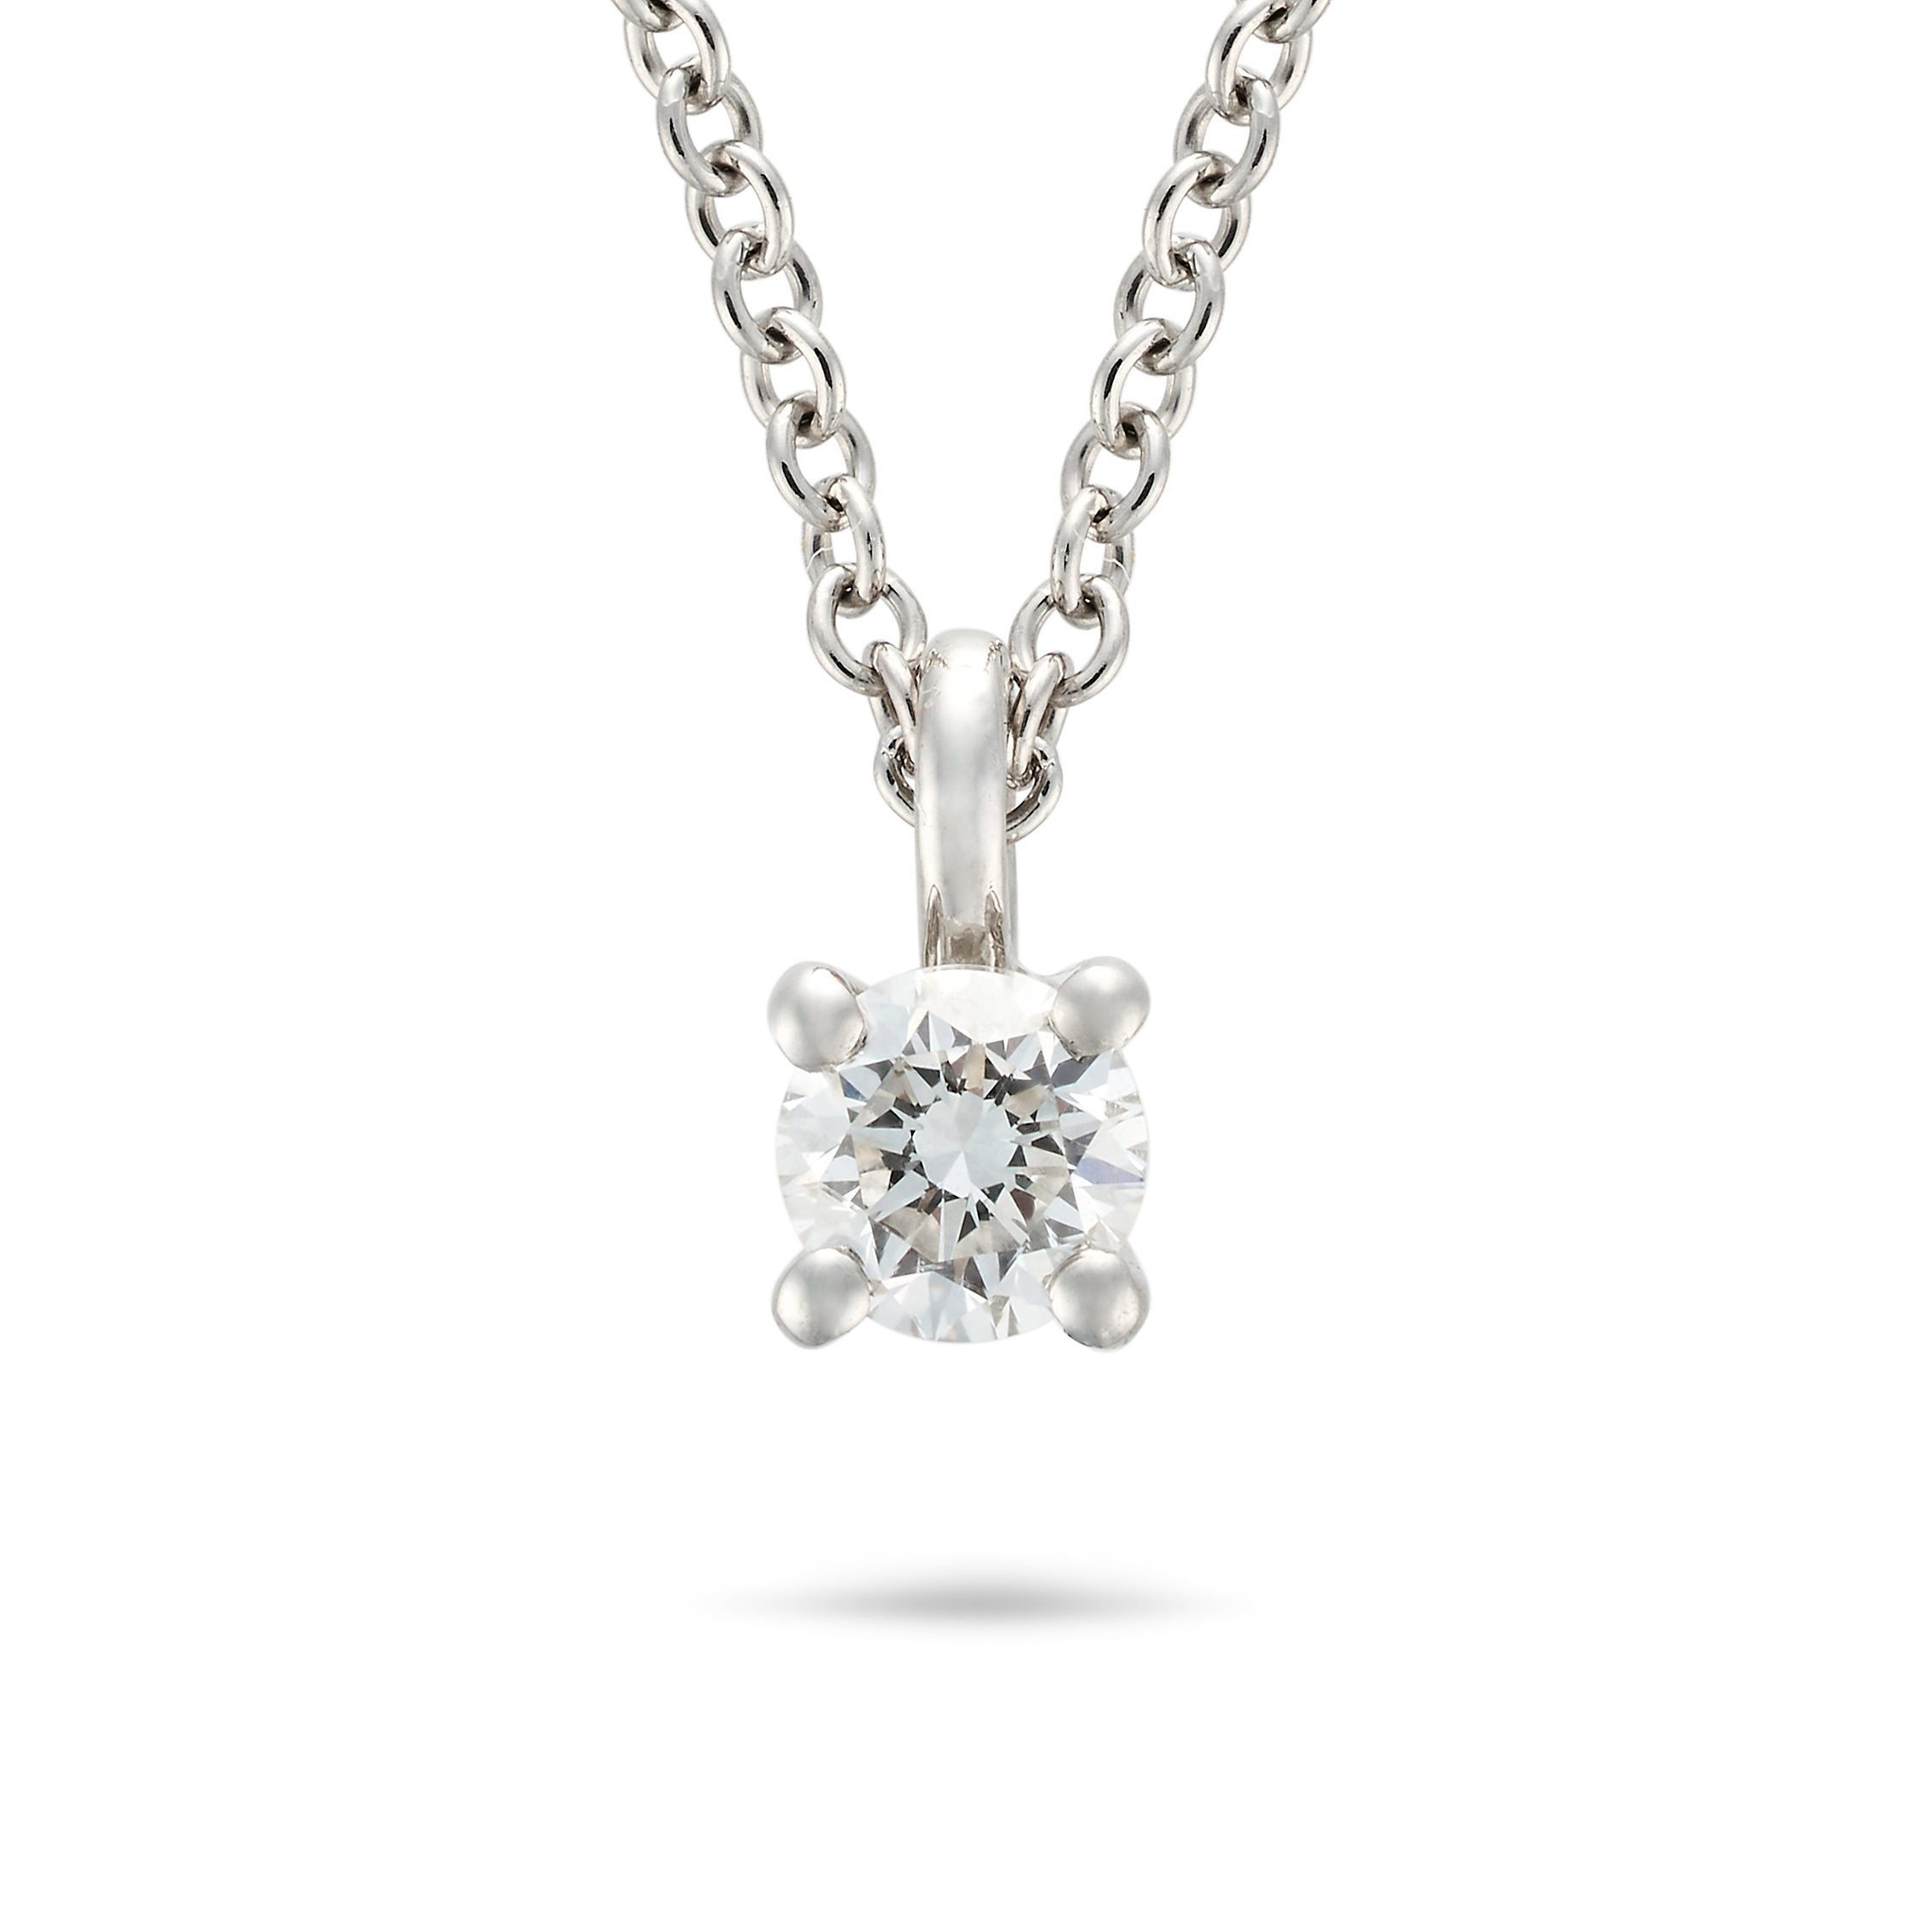 TIFFANY & CO., A DIAMOND PENDANT NECKLACE the pendant set with a round brilliant cut diamond of a...